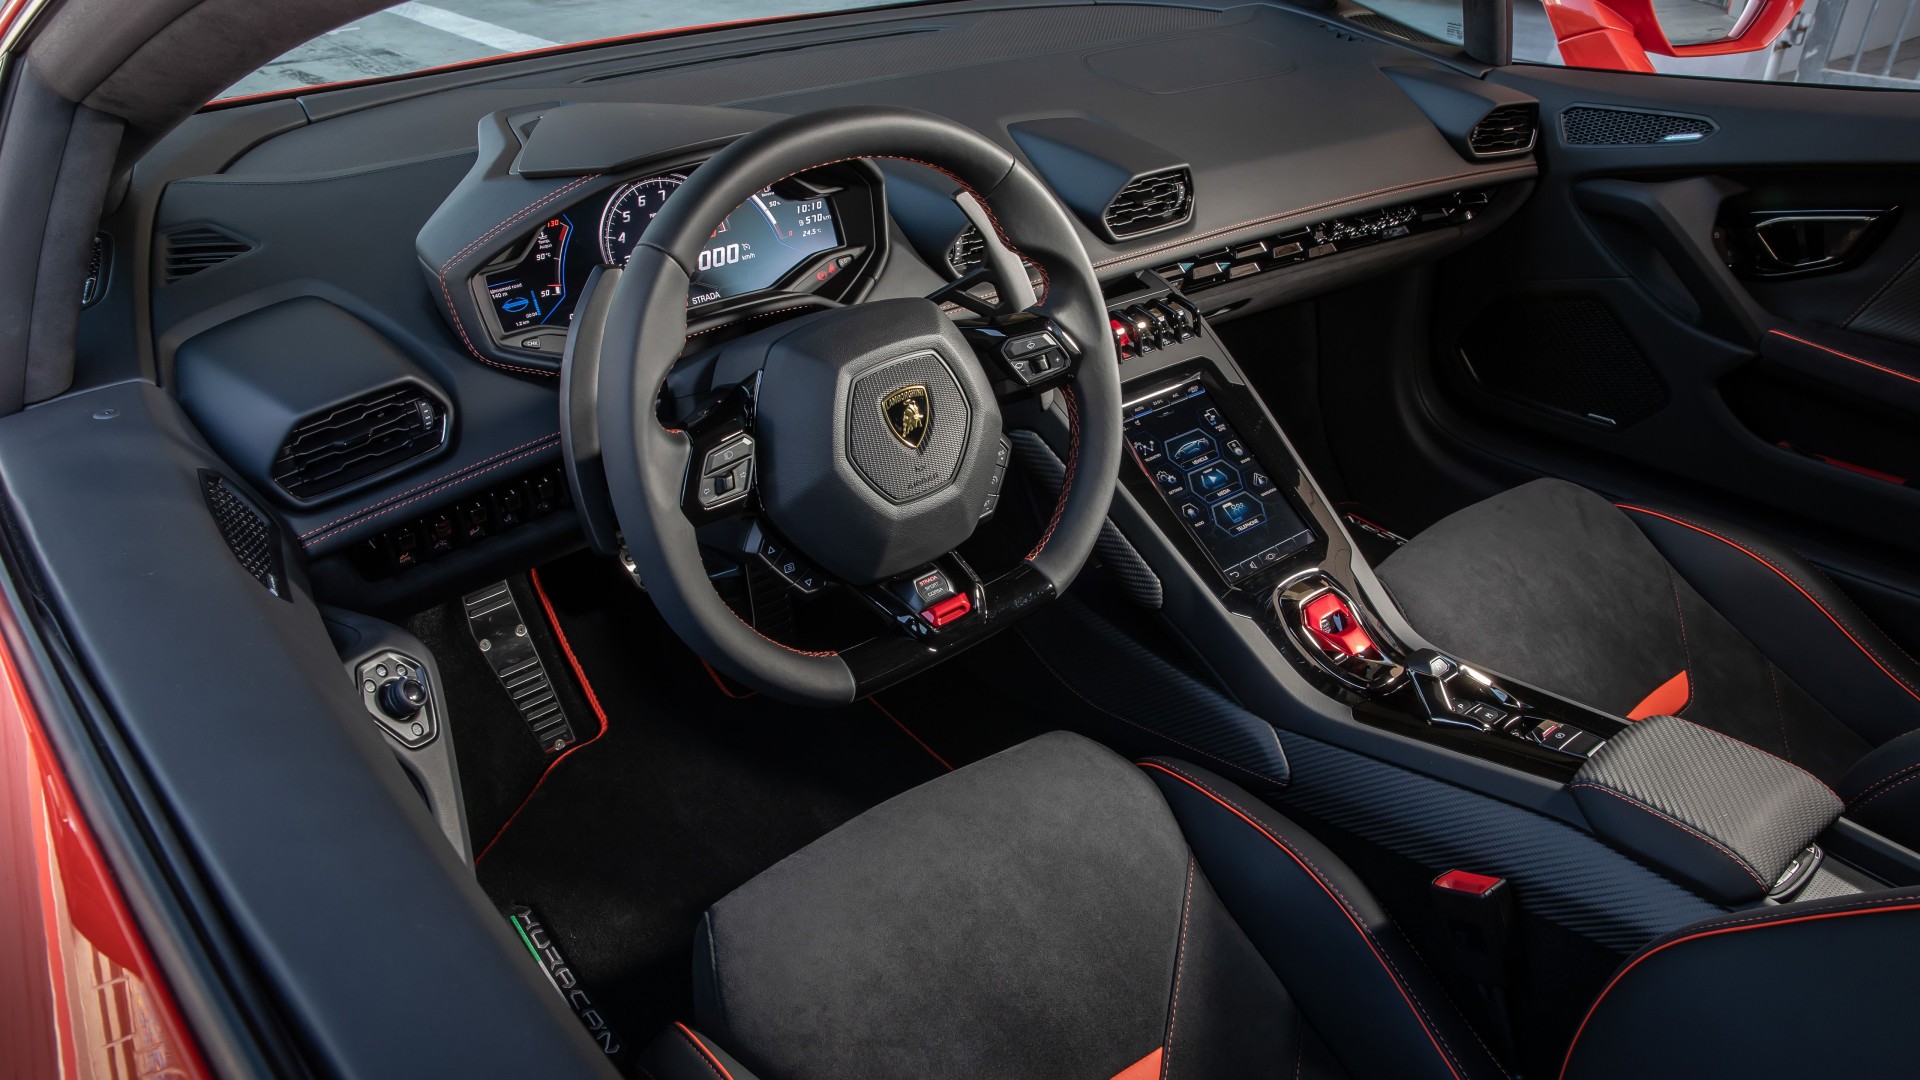 Lamborghini Huracan EVO Interior 5K 2019 Wallpaper | HD ...